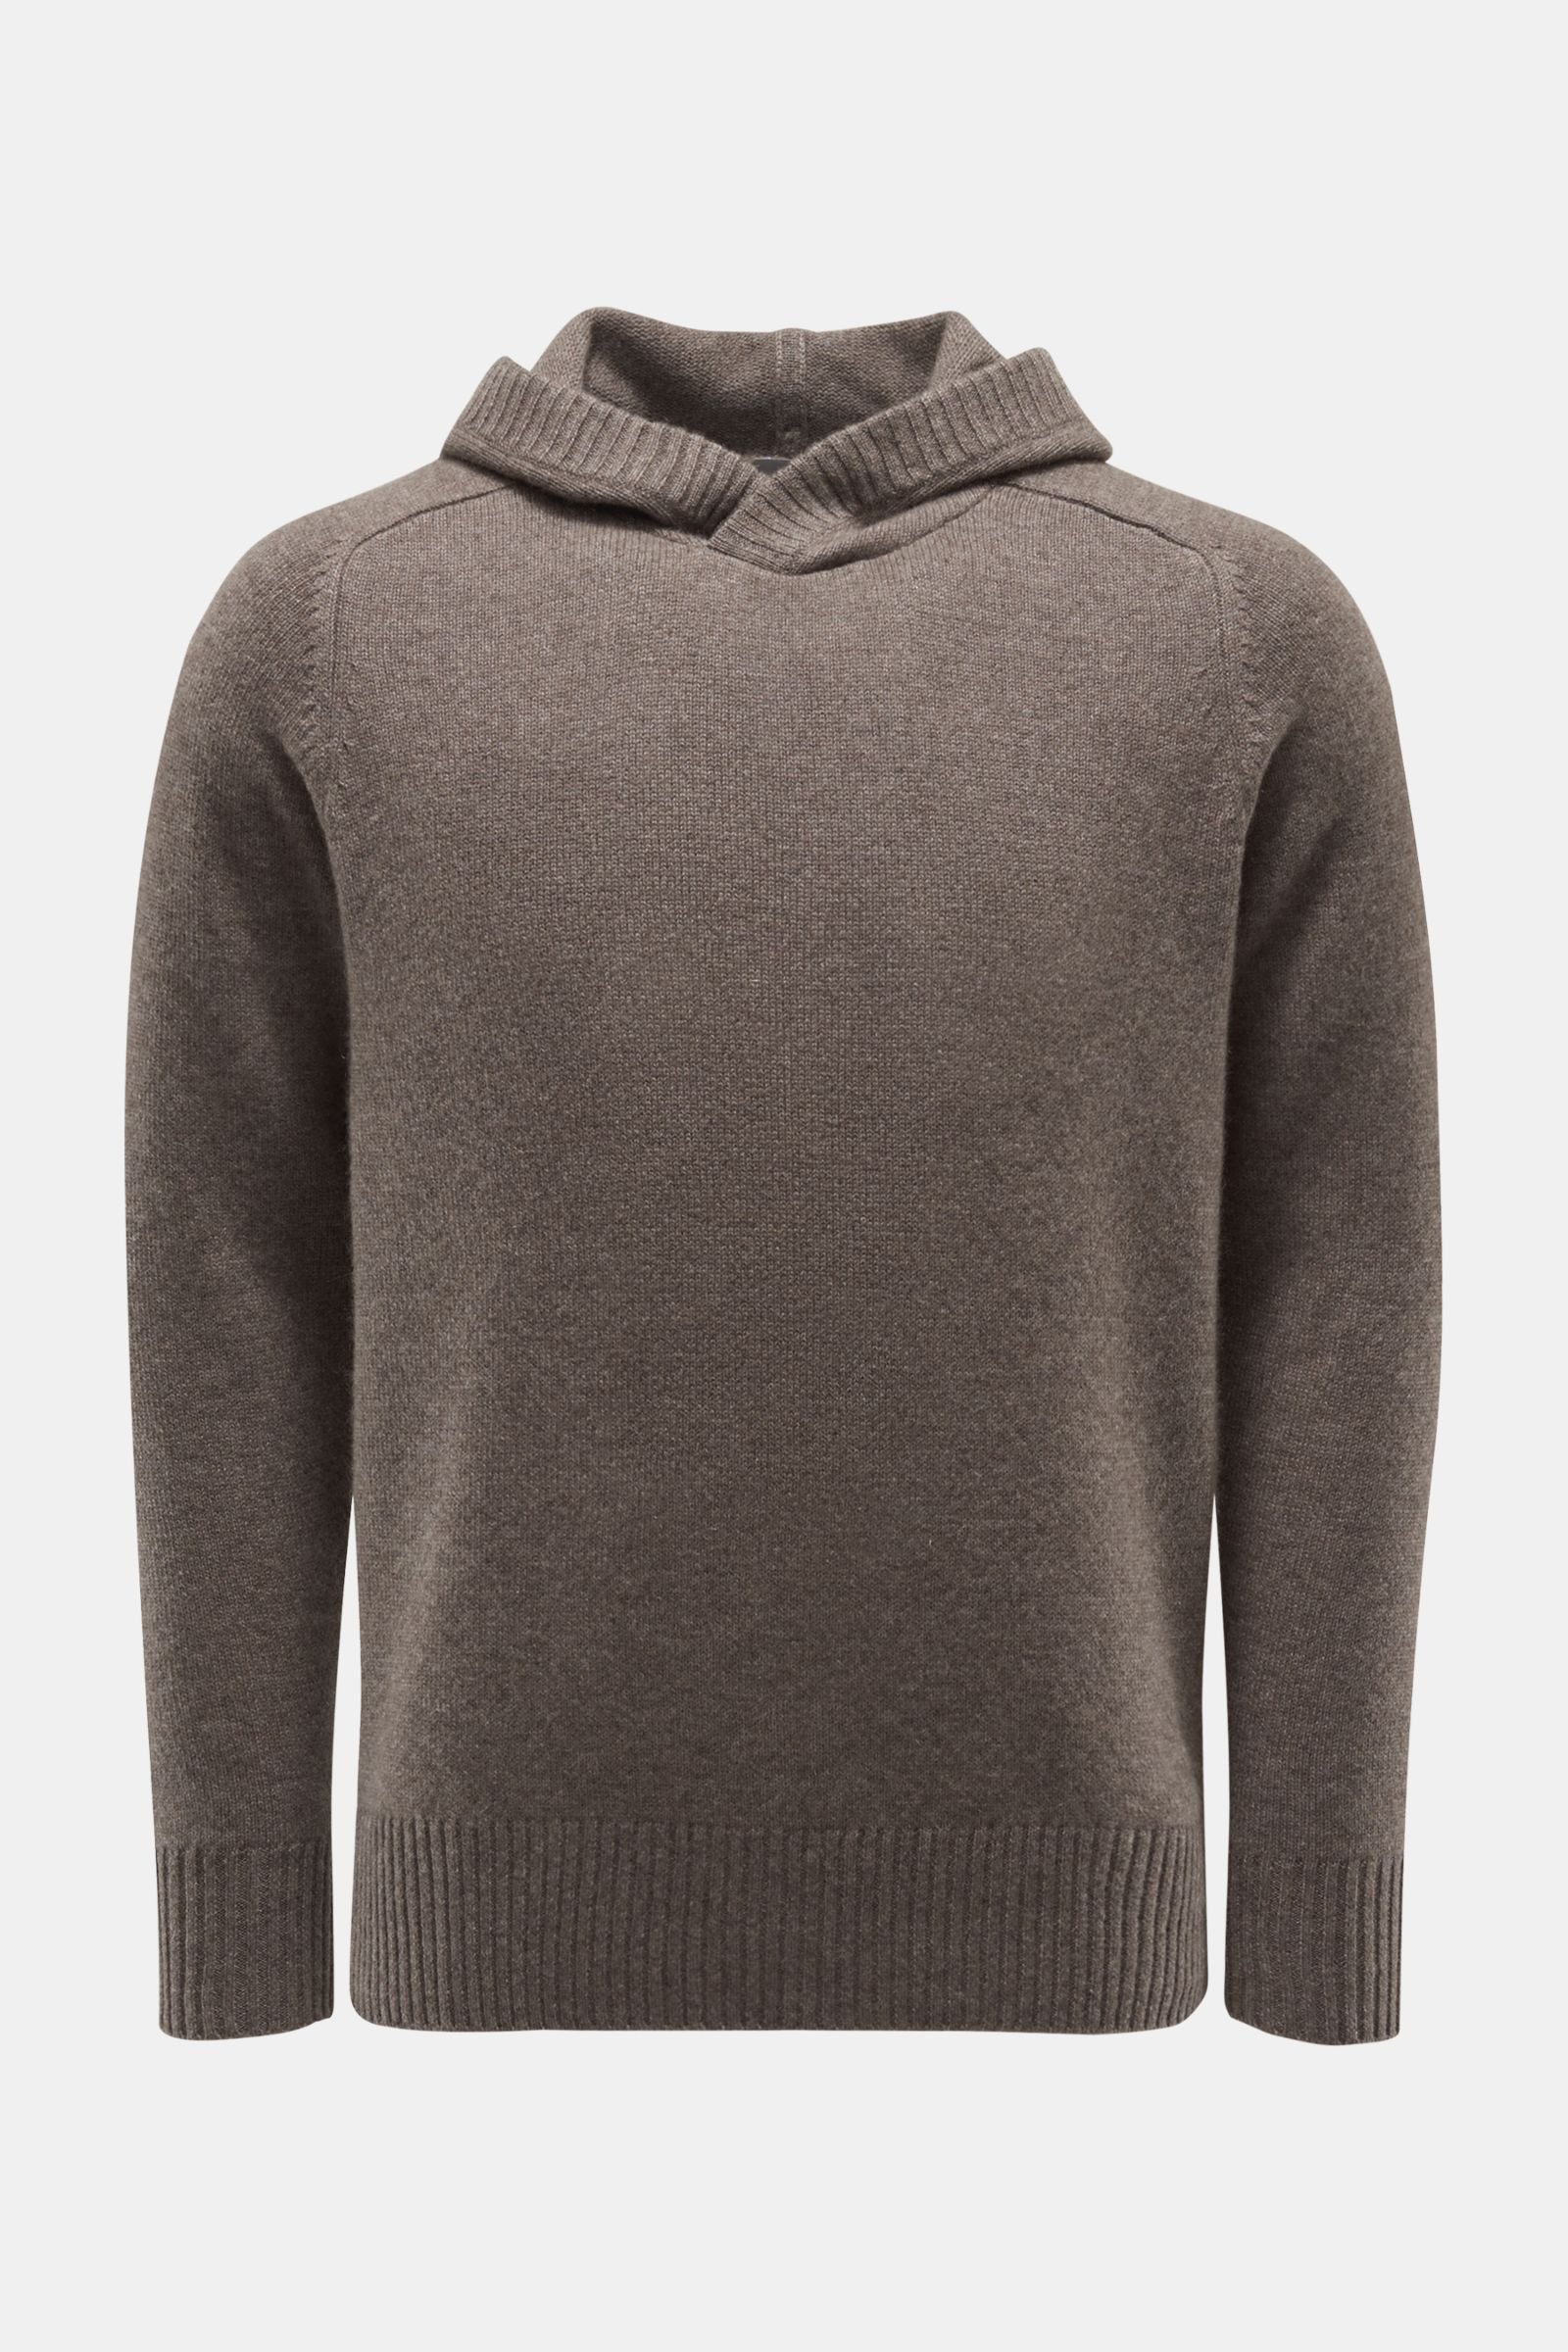 Cashmere hooded jumper grey-brown